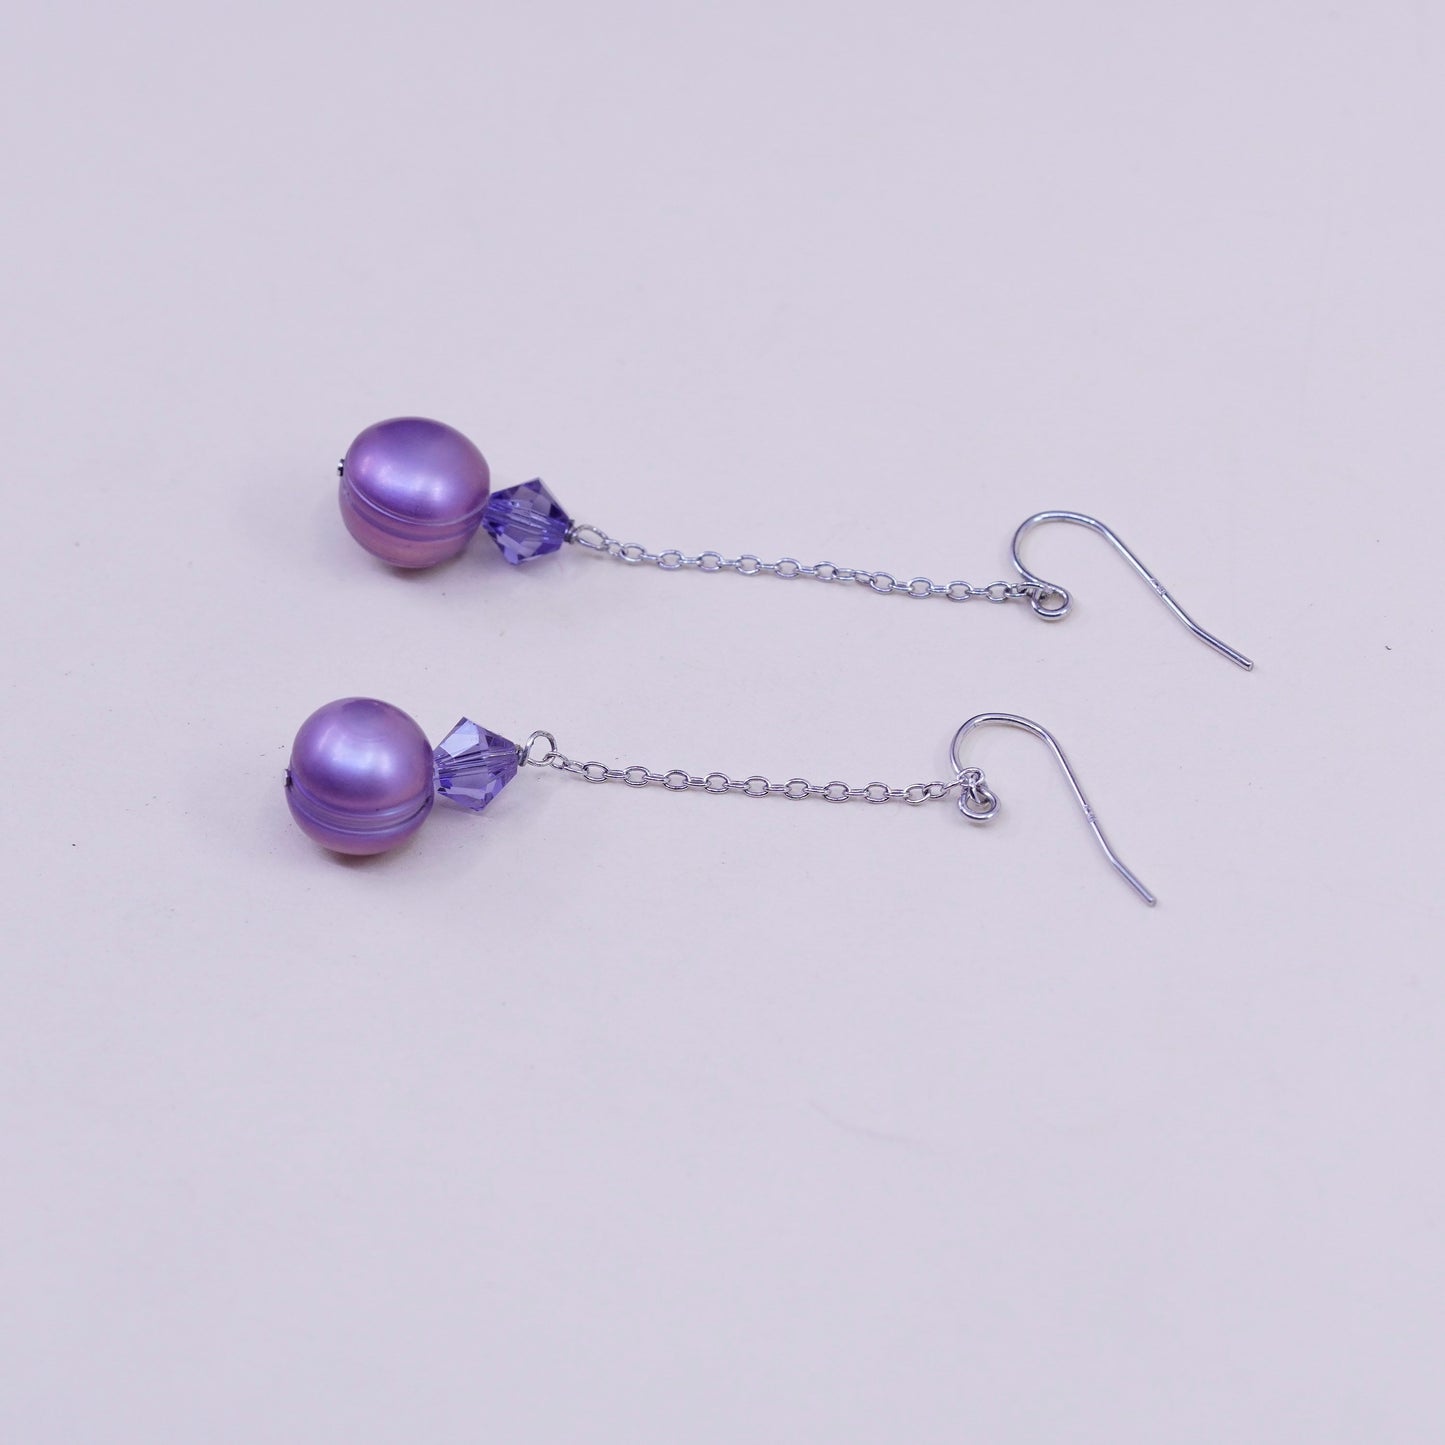 Vintage Sterling silver handmade earrings, 925 chain with purple pearl drops